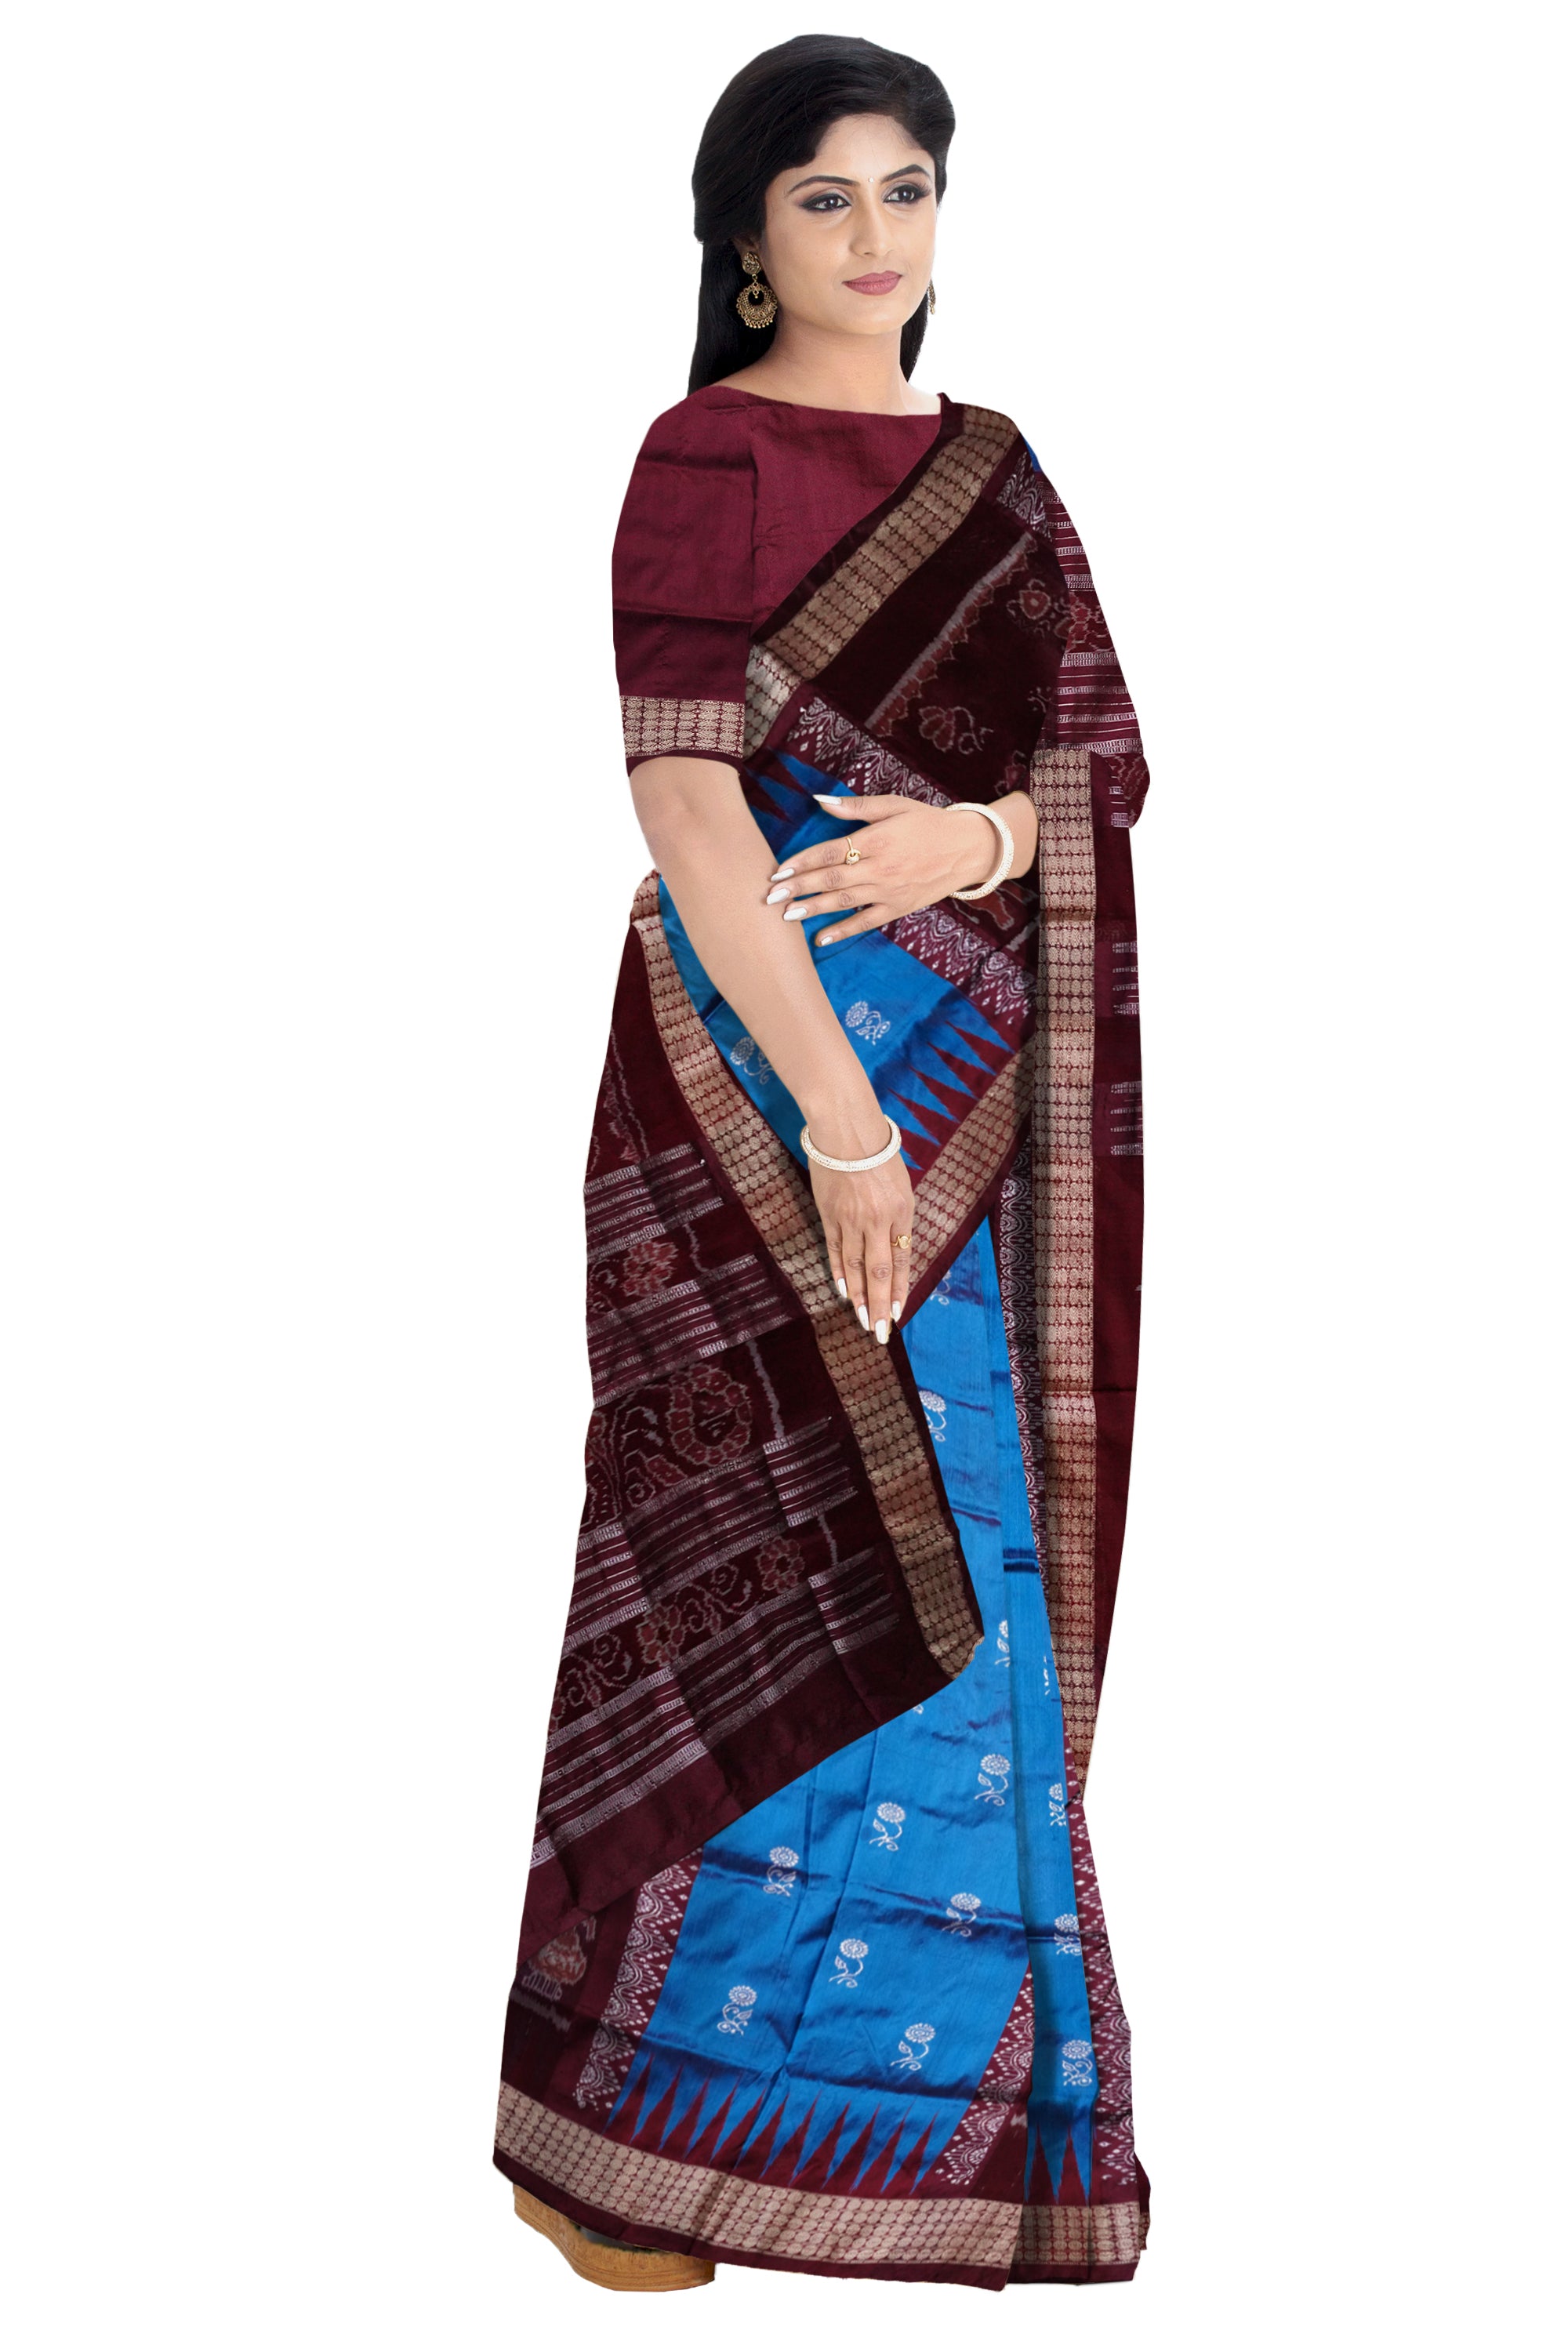 Nartaki pattern bomkei  pata saree in sky and coffee color. - Koshali Arts & Crafts Enterprise